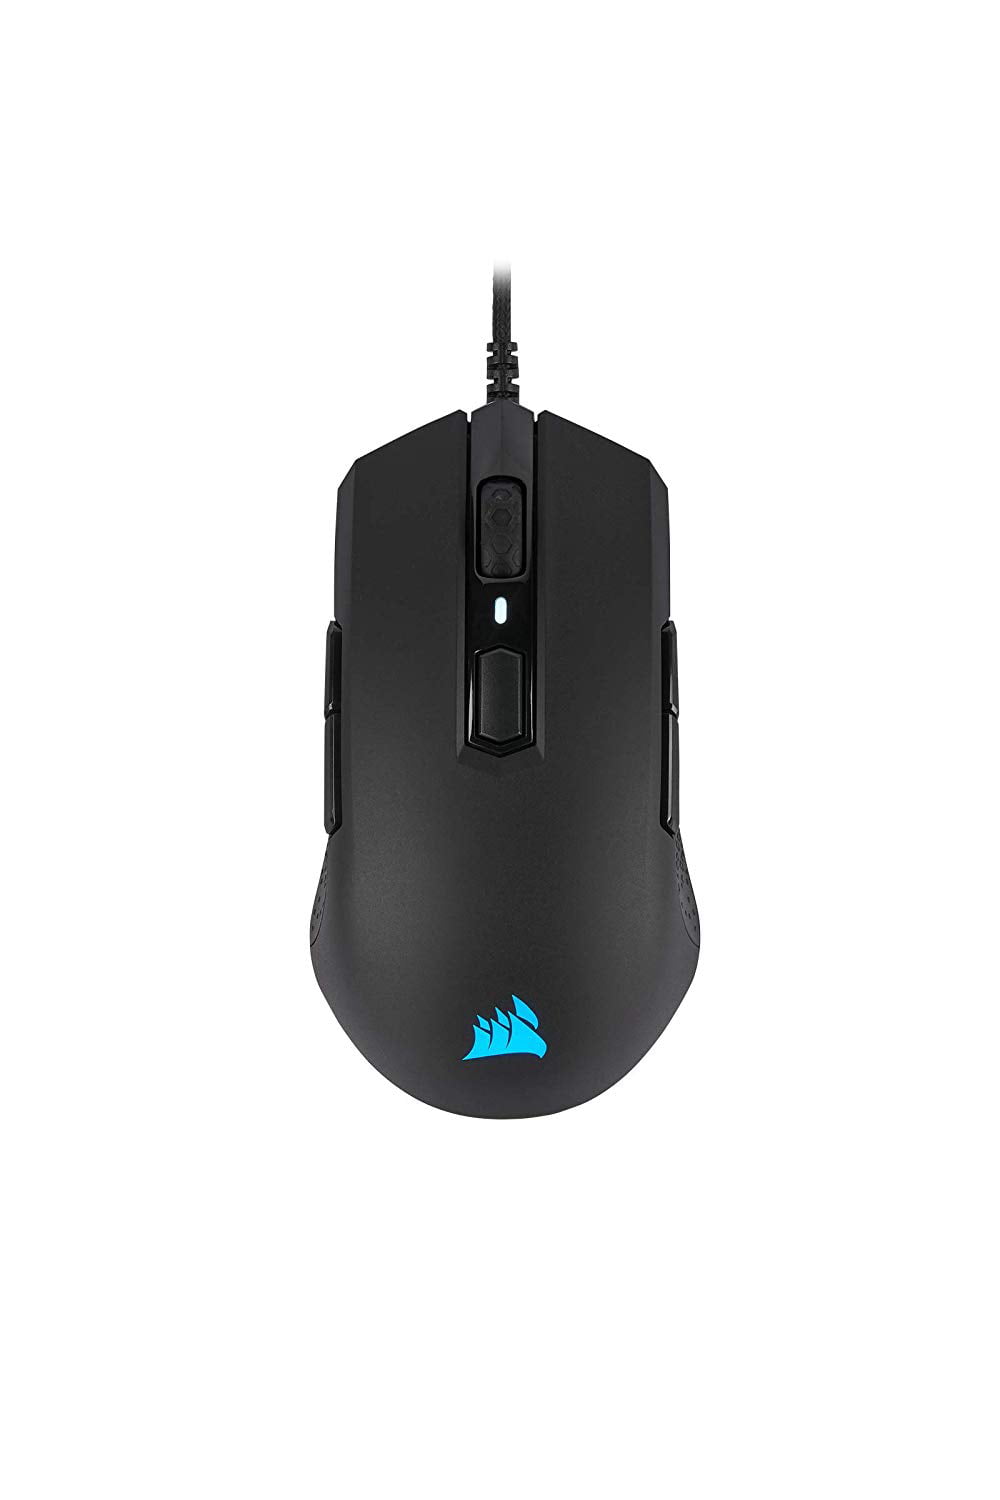 Corsair Katar Pro Wireless Gaming Mouse - Lightweight FPS/MOBA 